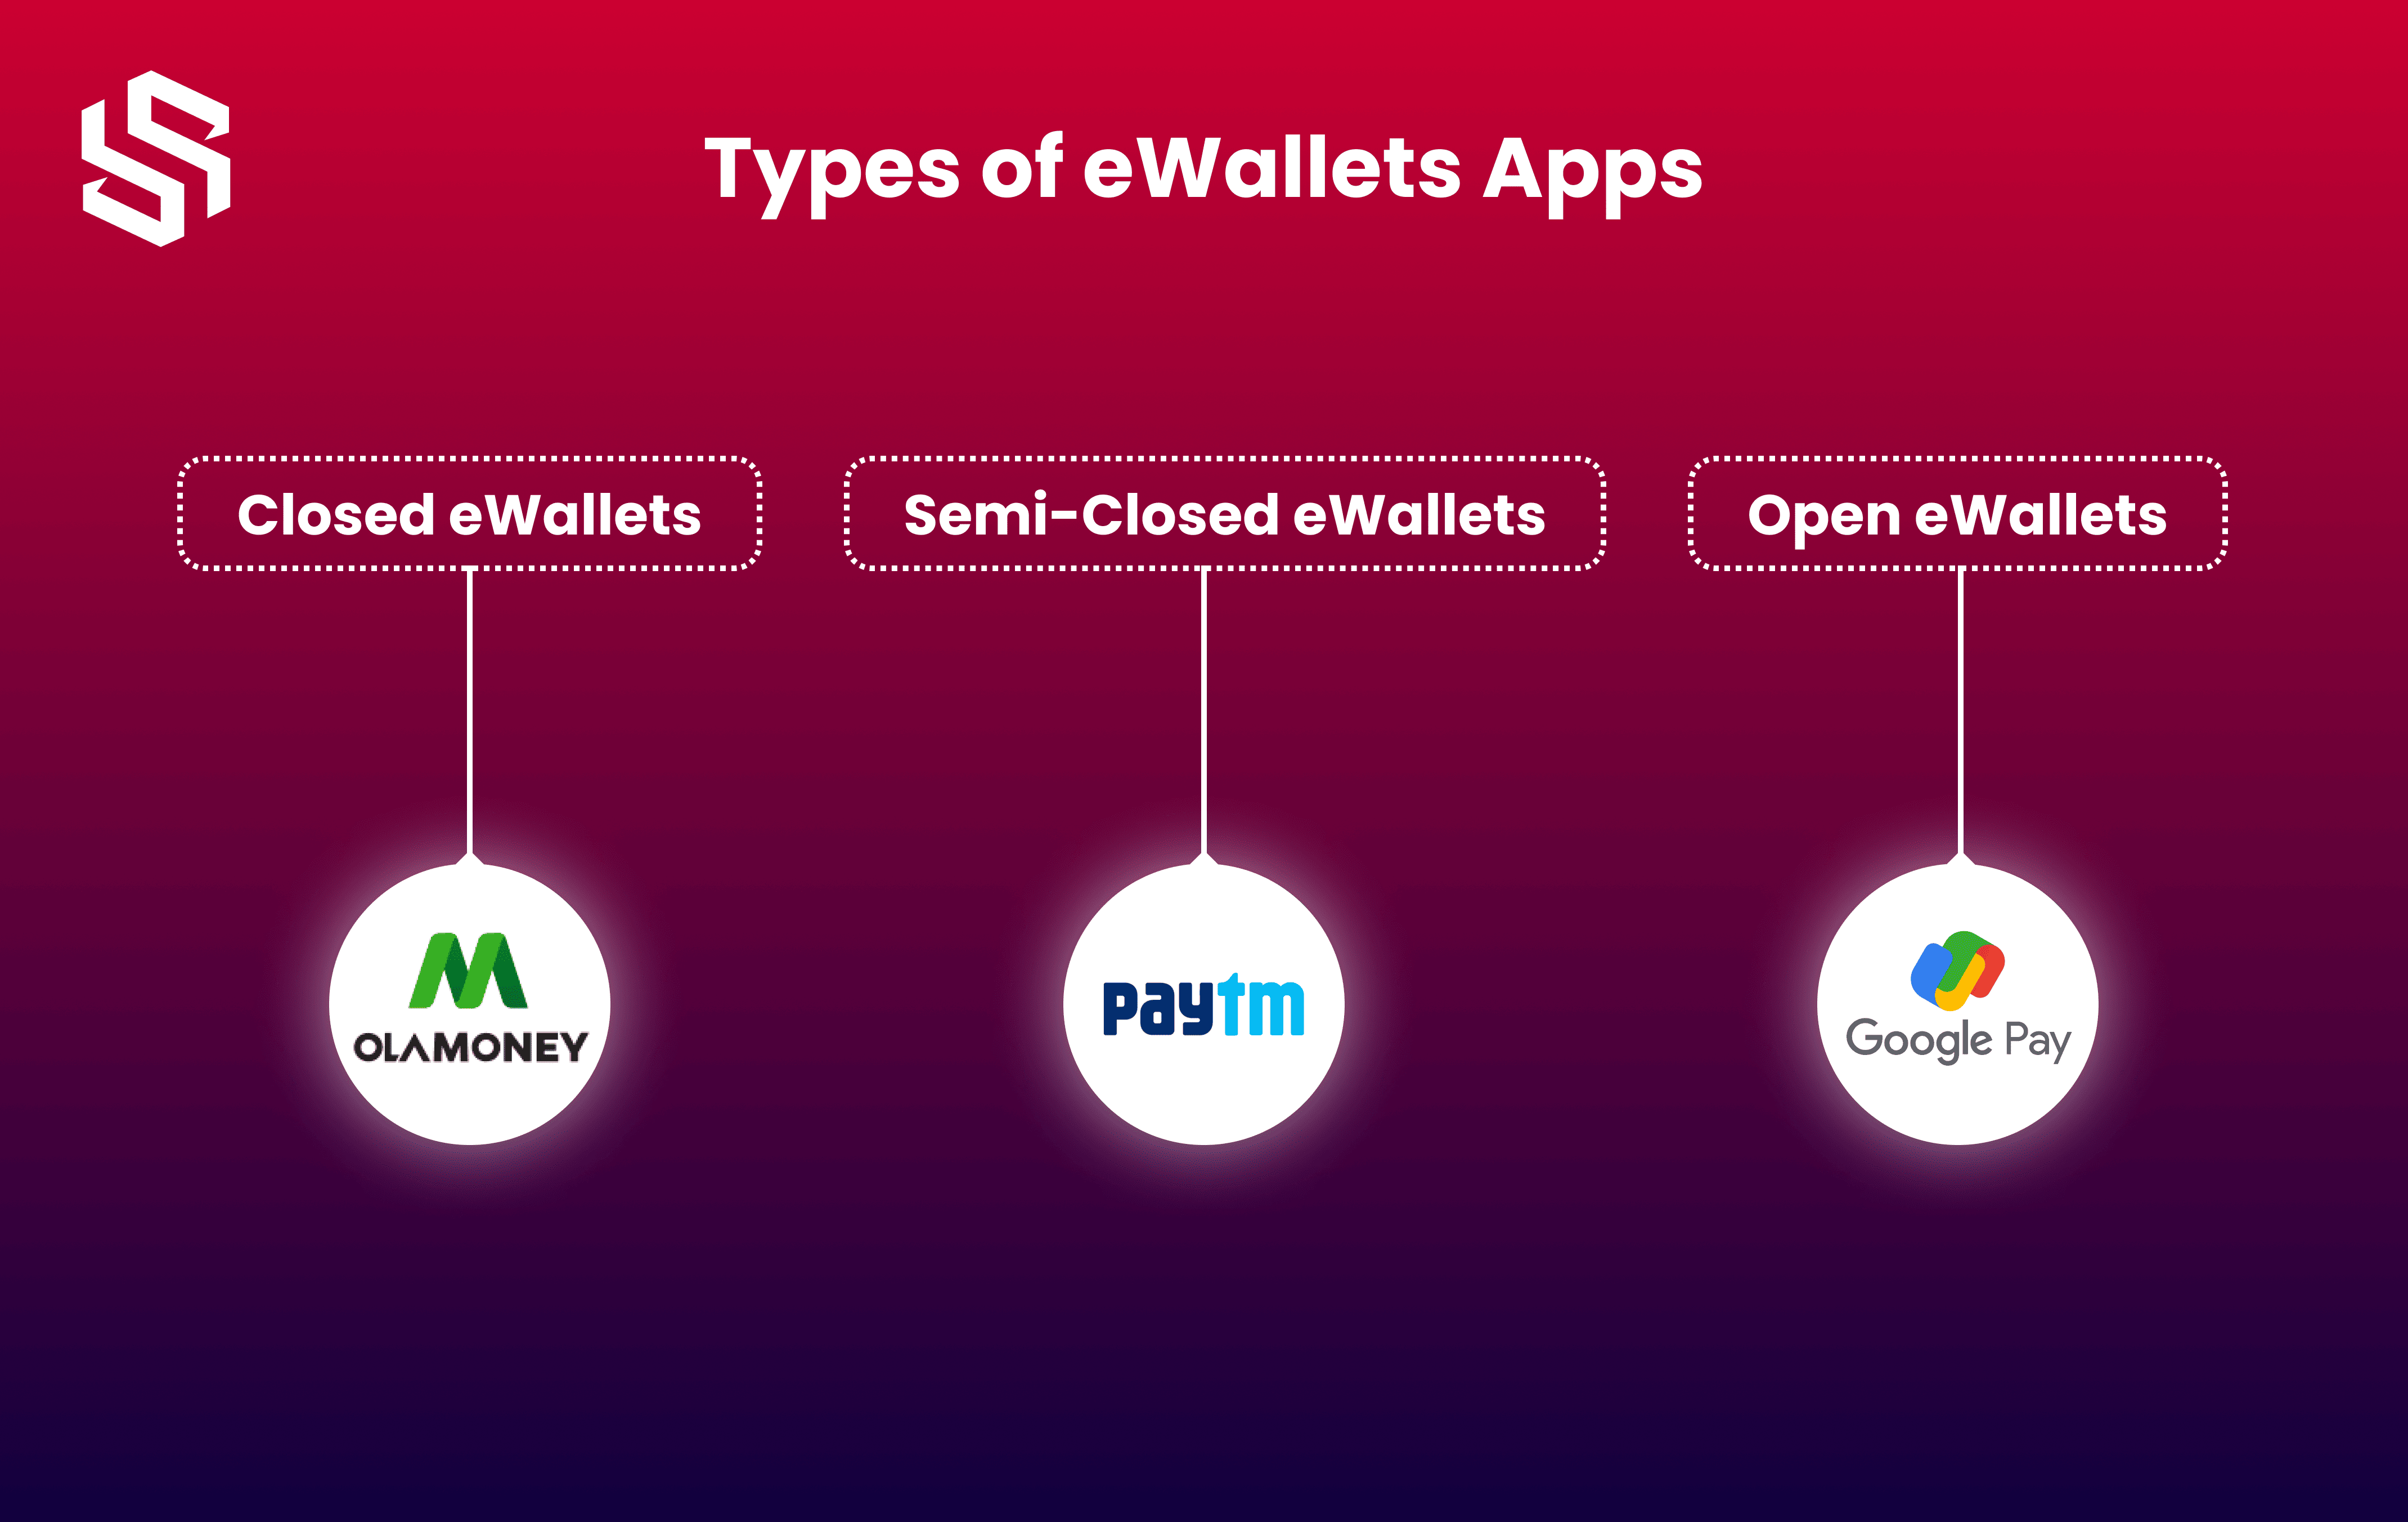 Types of eWallet Apps